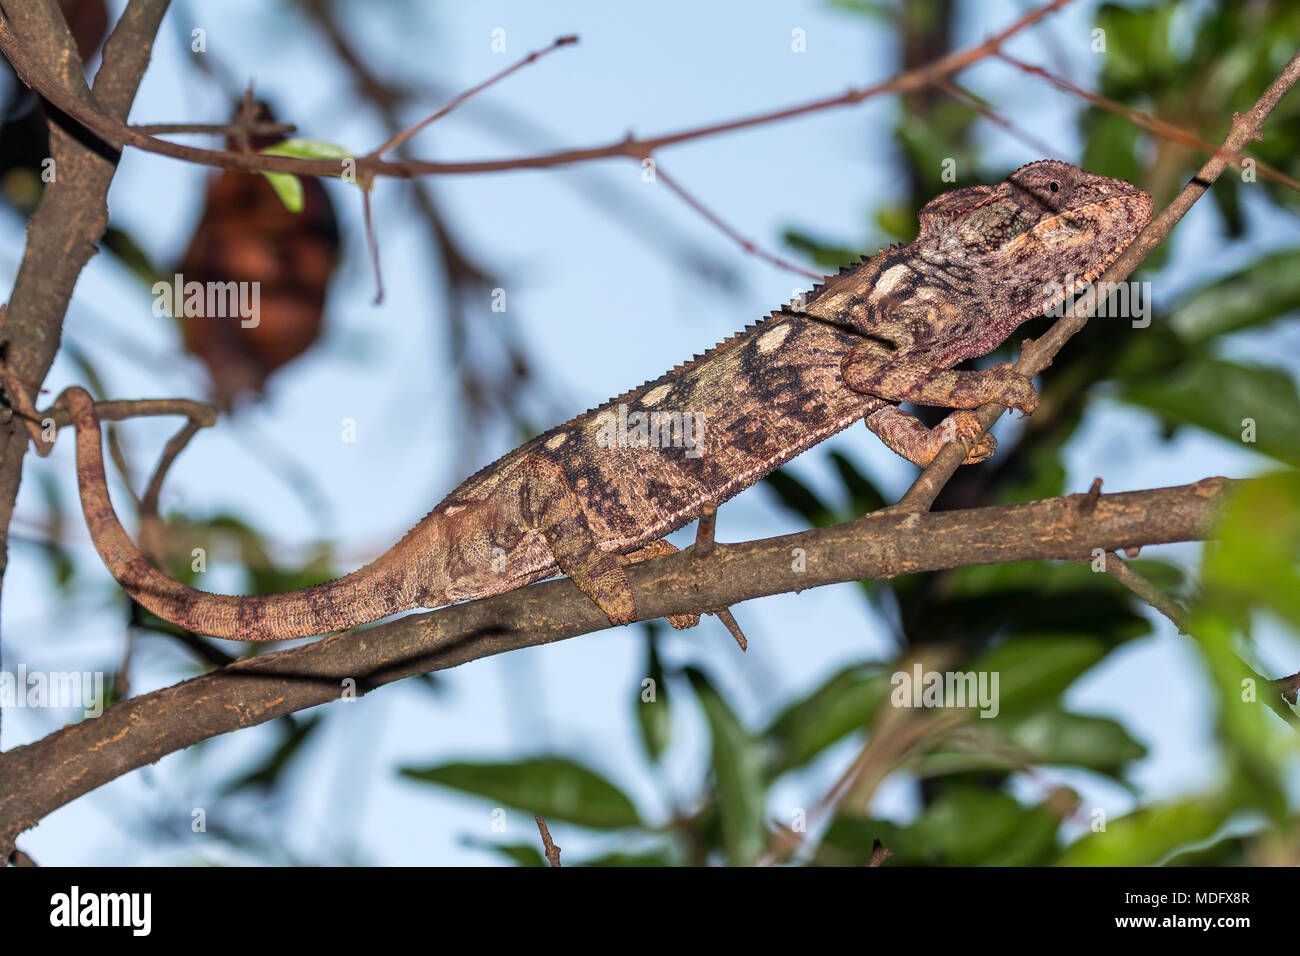 Oustalet oder Madagaskars riesigen Chameleon (Furcifer oustaleti), Madagaskar. Stockfoto